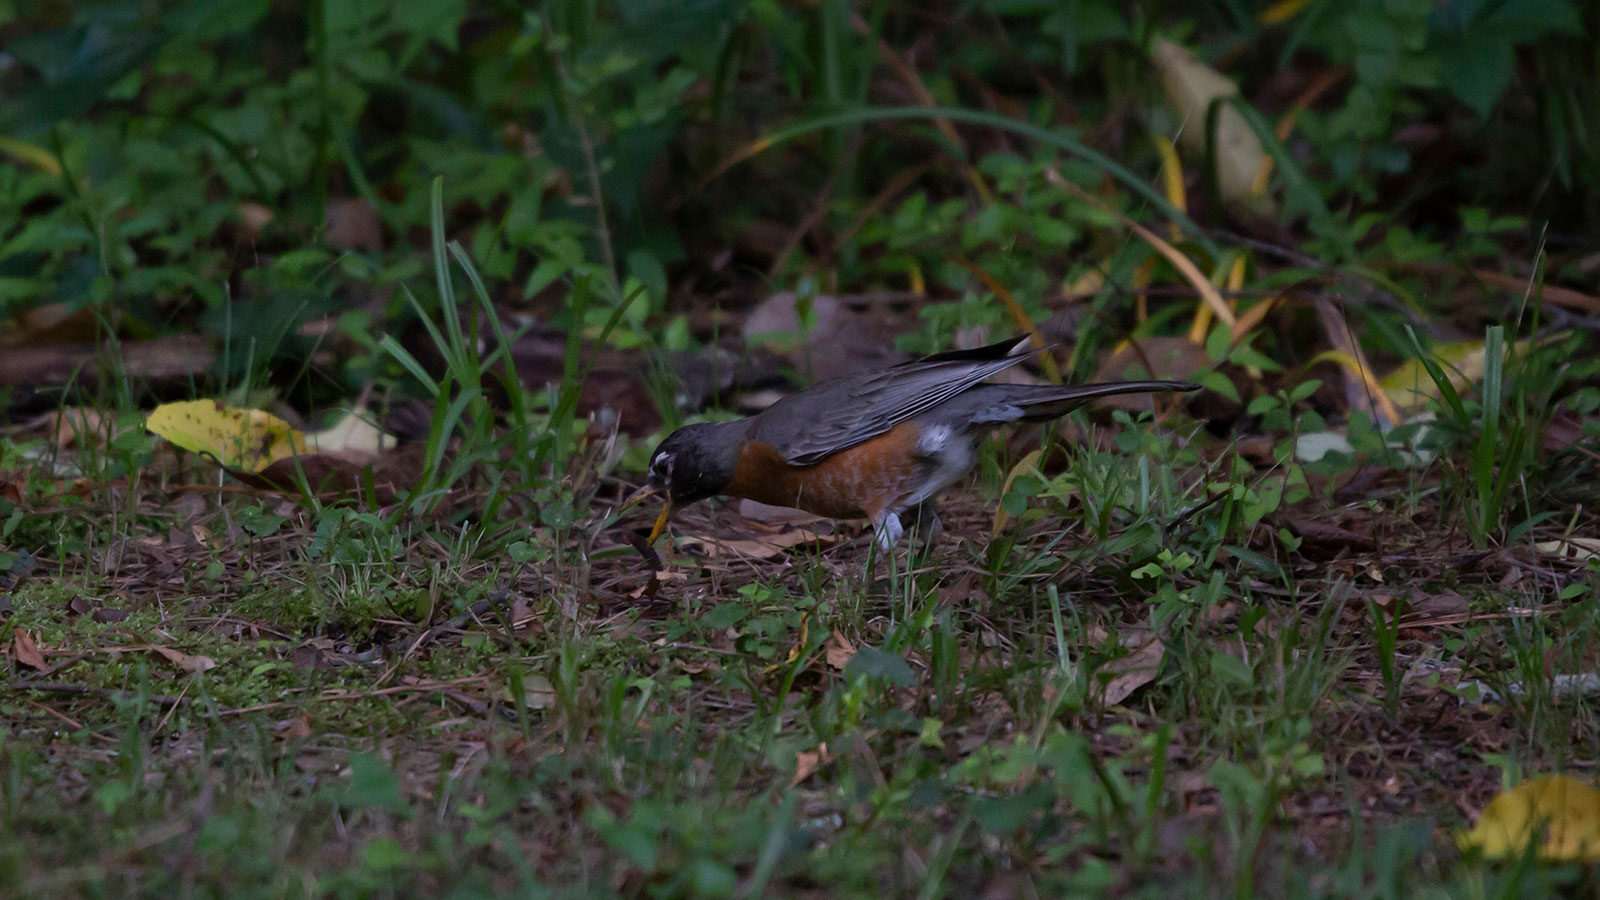 American robin eating a worm